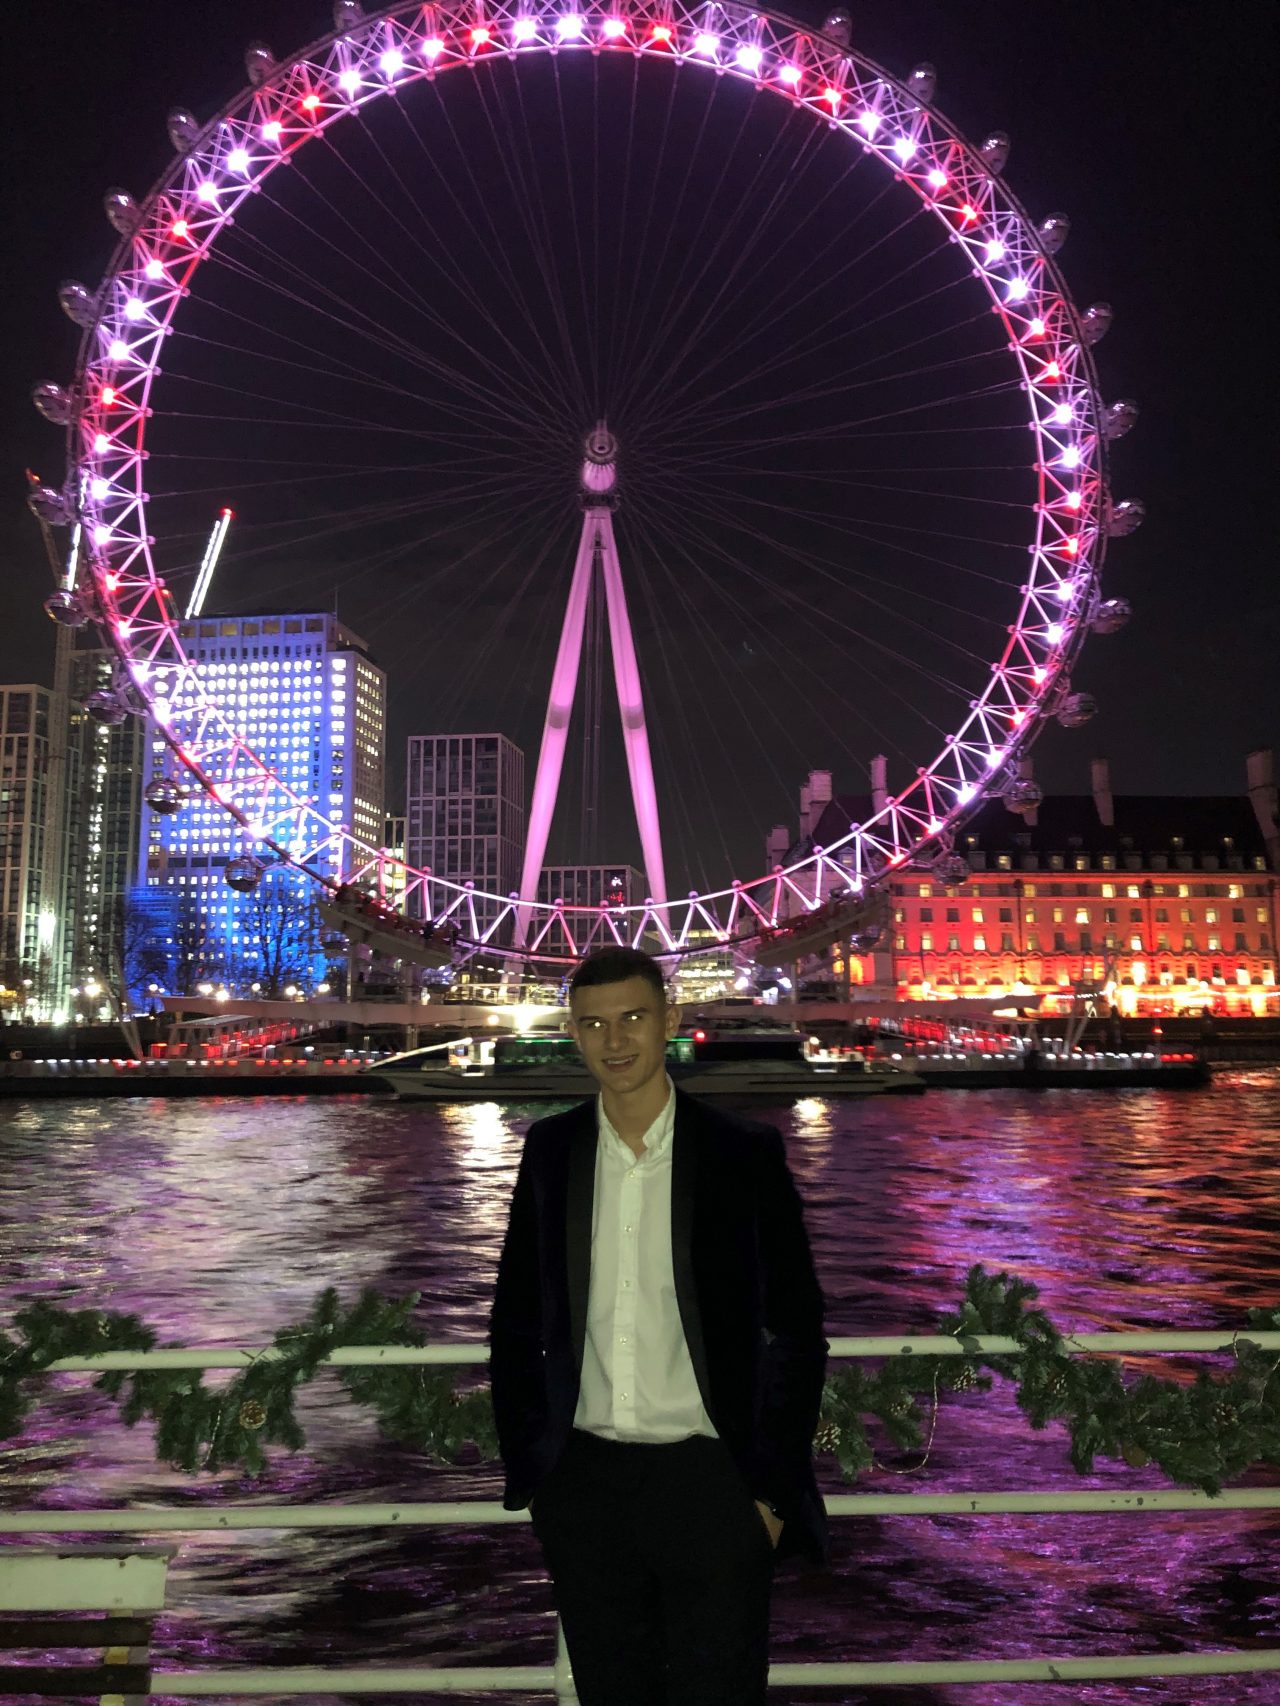 Inmarsat apprentice Ben Purser in front of the London Eye at nighttime attending an Inmarsat event